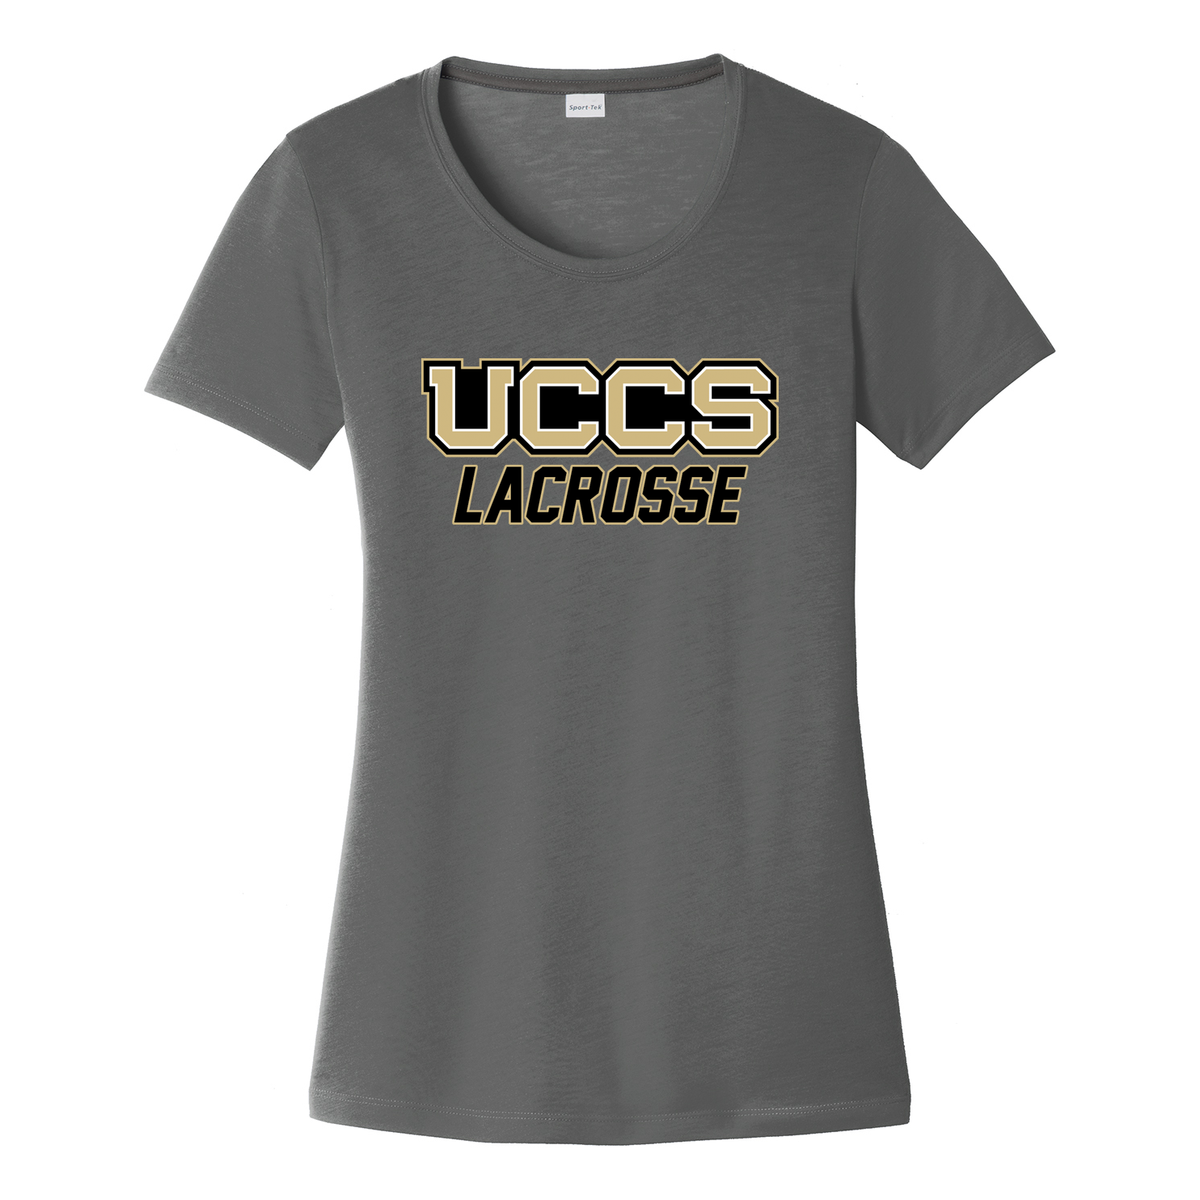 UCCS Women's CottonTouch Performance T-Shirt